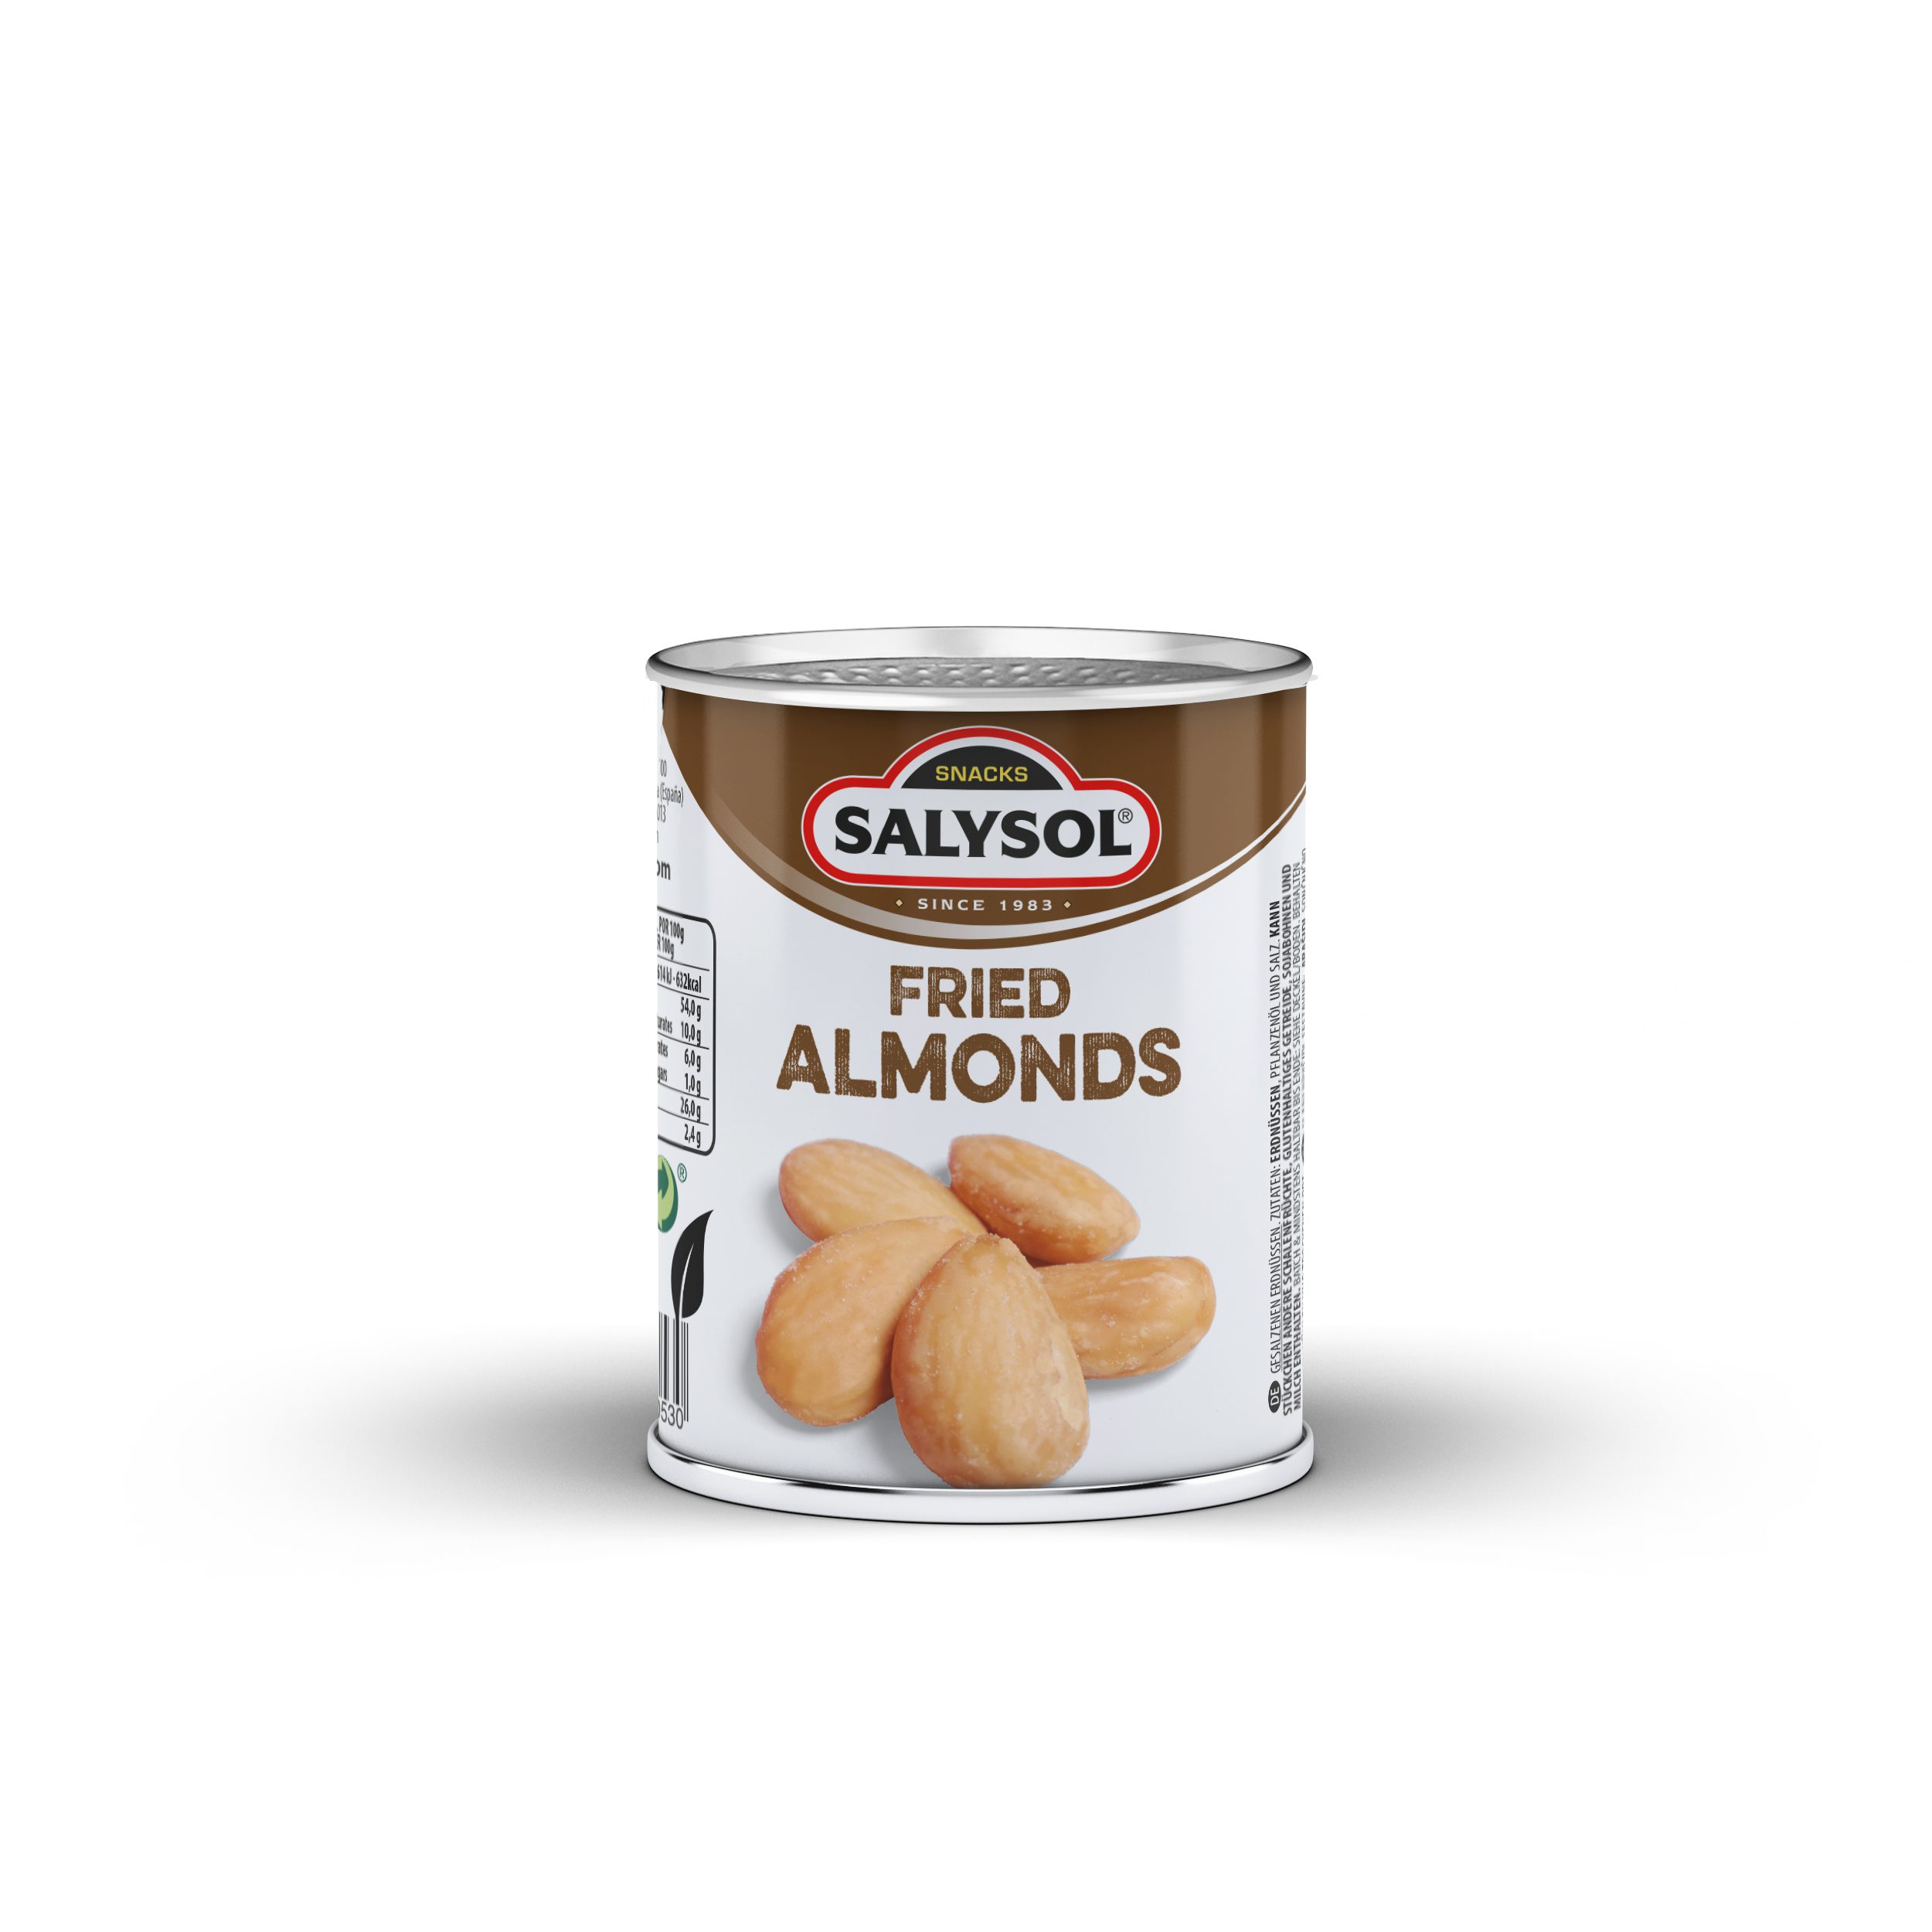 LO003 Fried almonds